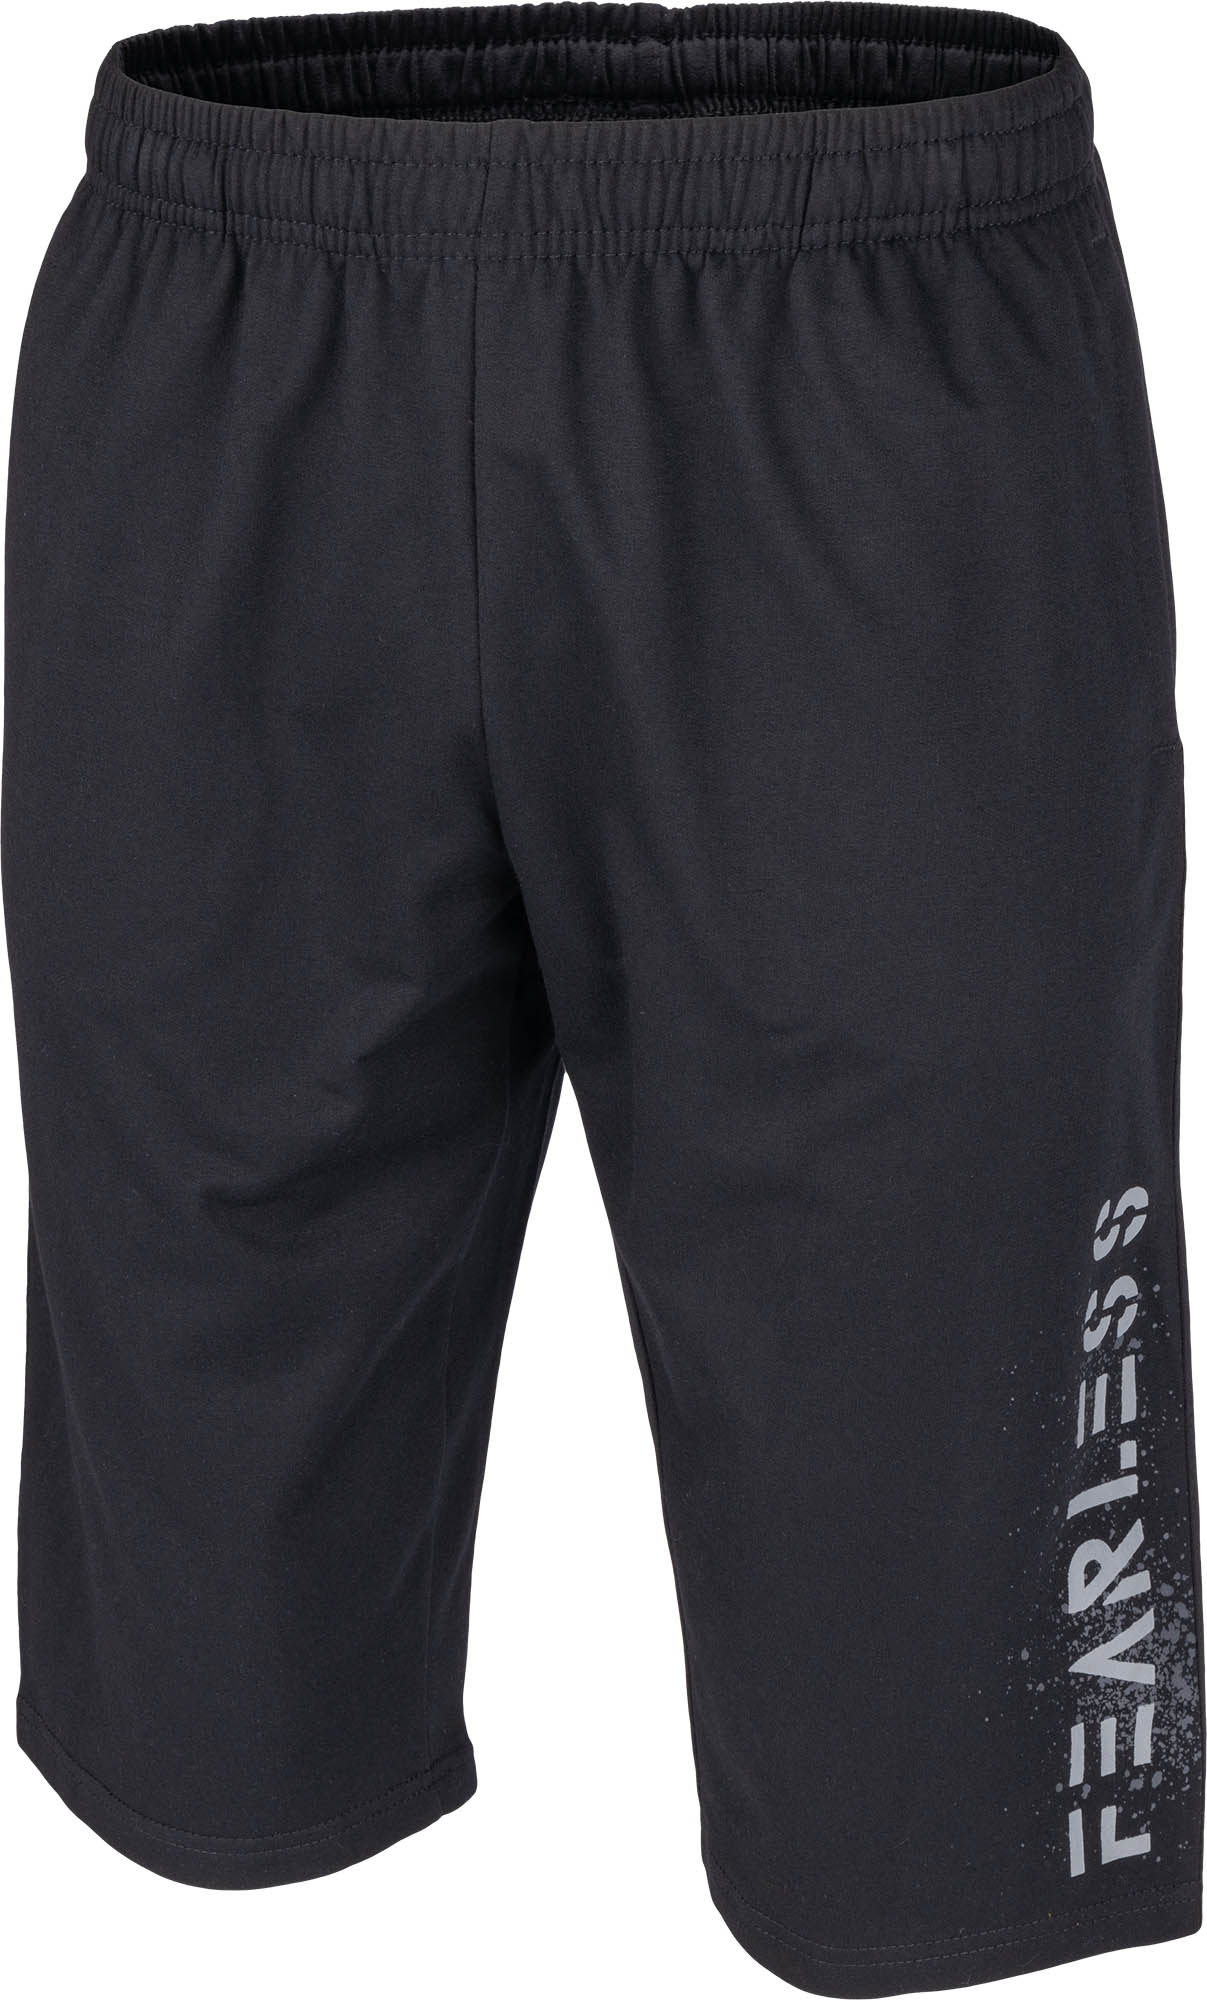 Men’s 3/4 length sweatpants